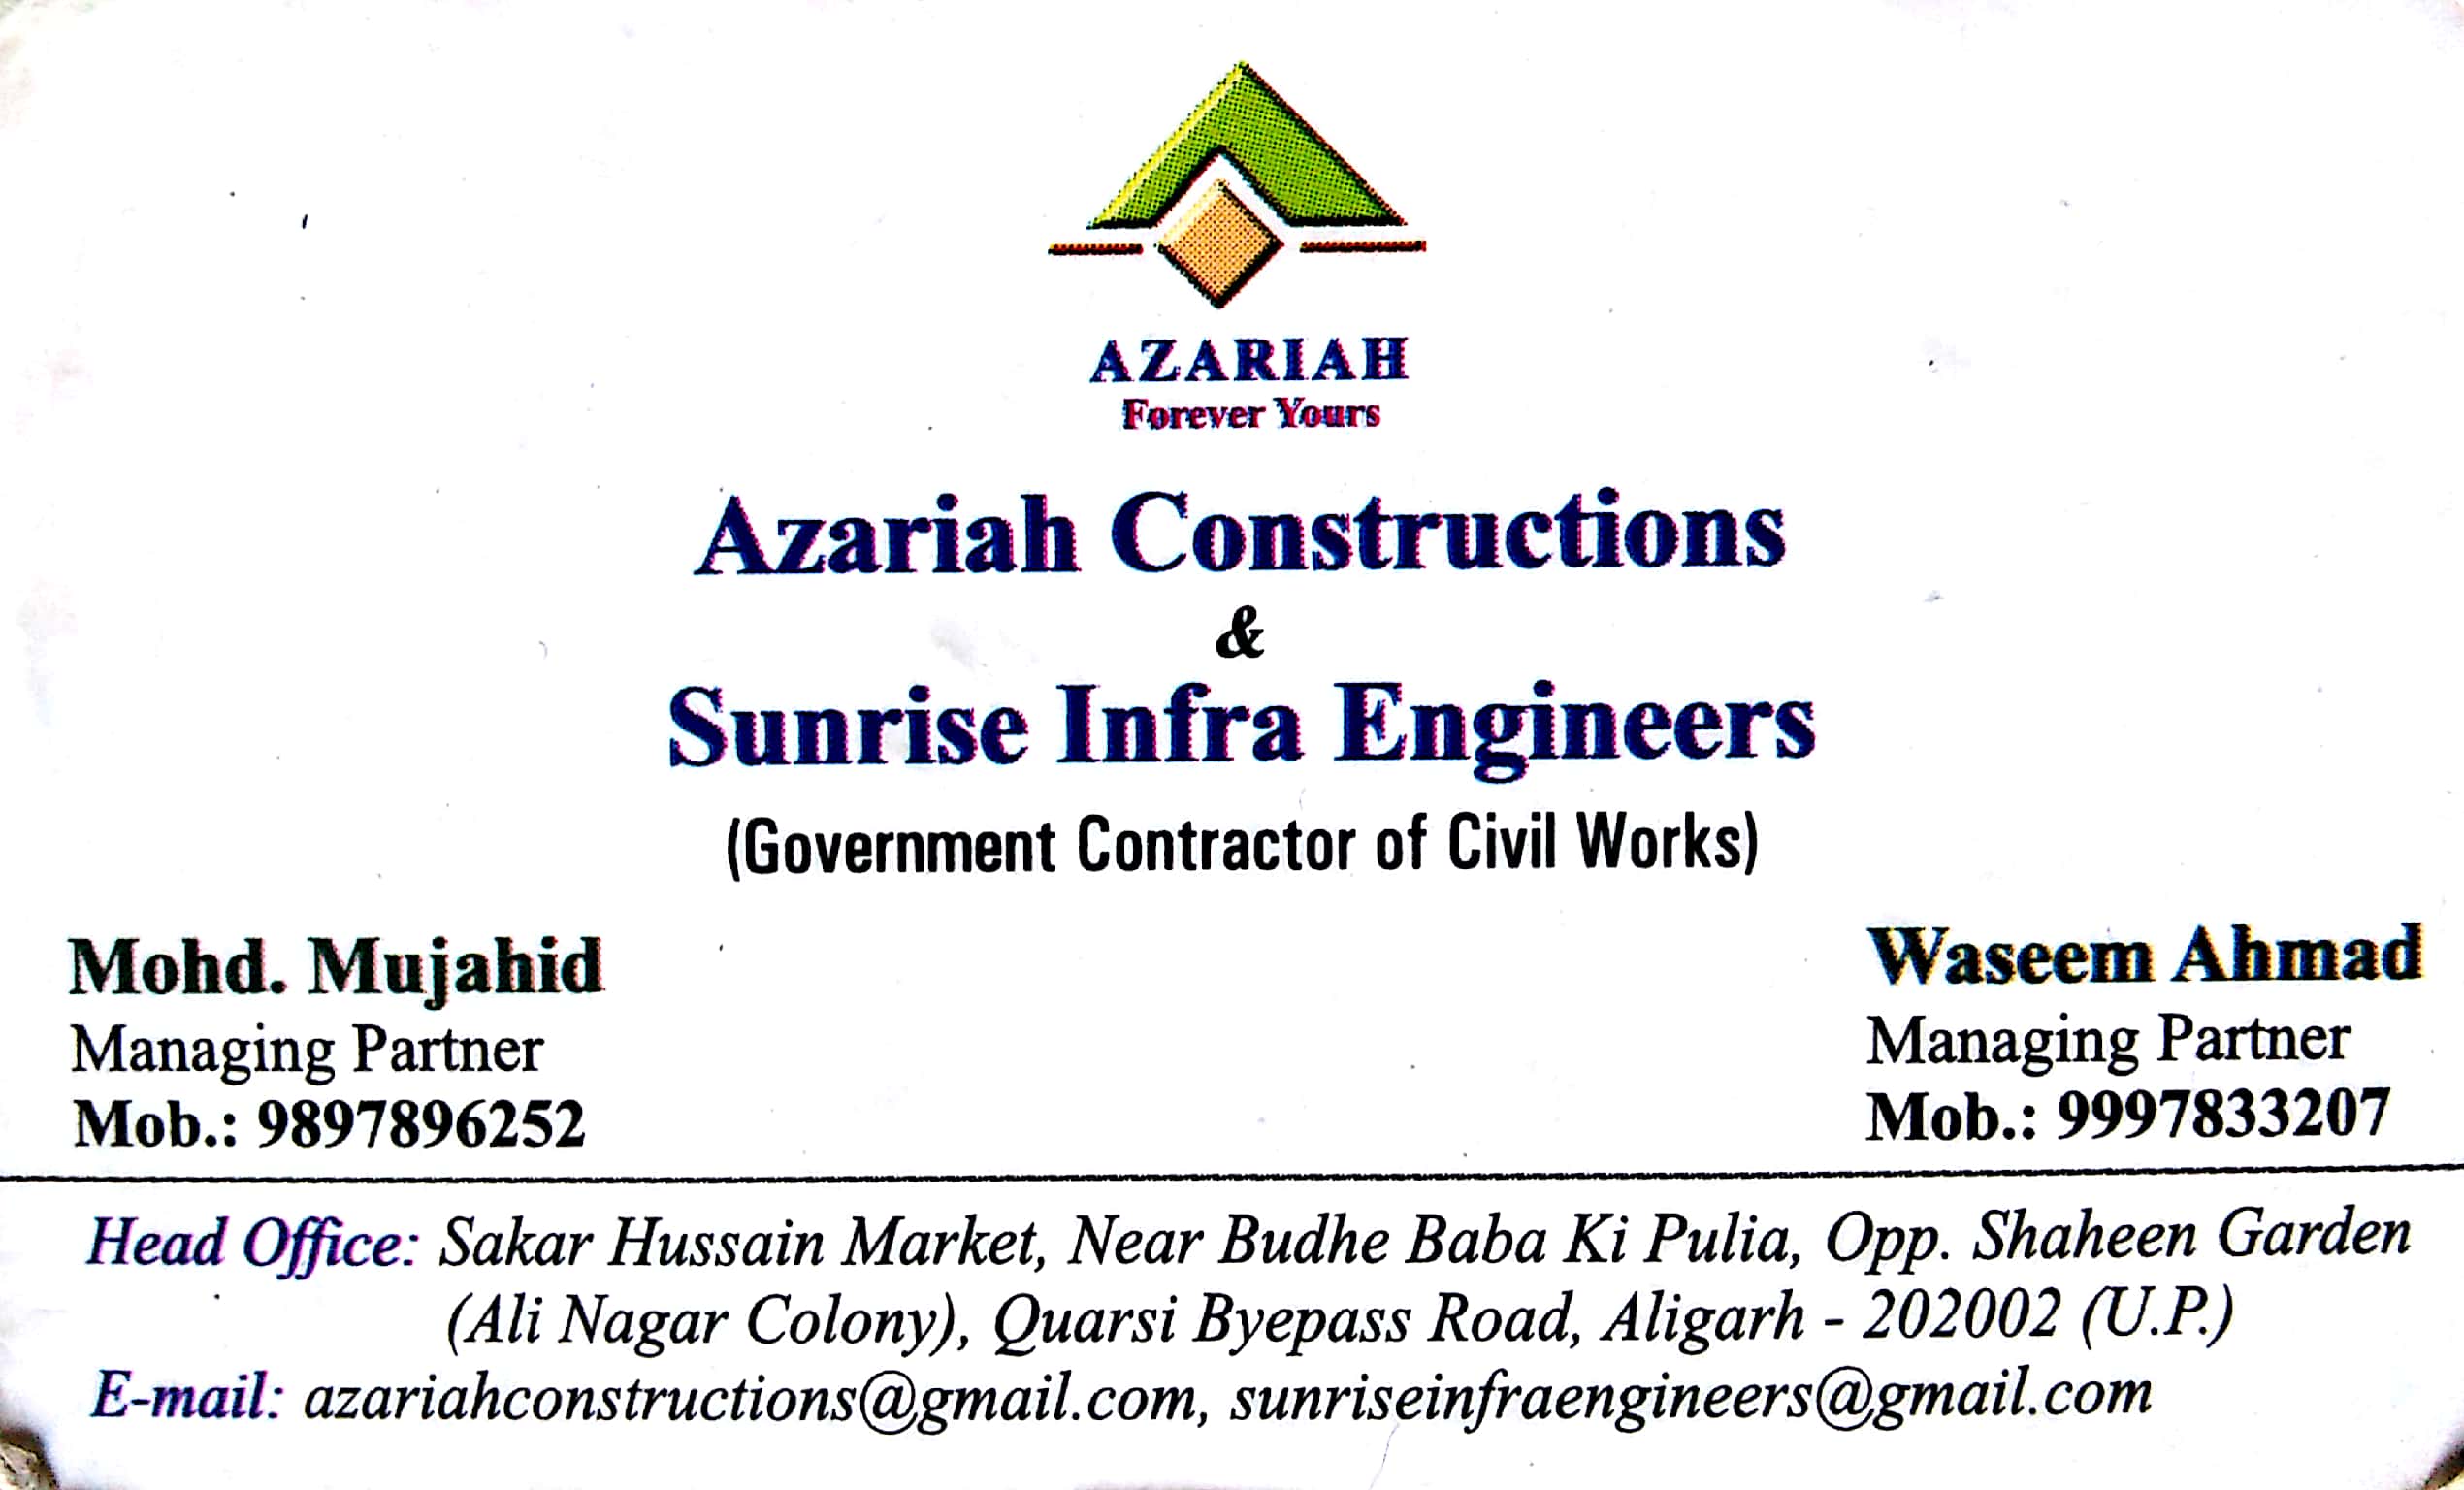 AZARIAH CONSTRUCTION & SUNRISE INFRA ENGINEERS IN ALIGARH-CITY